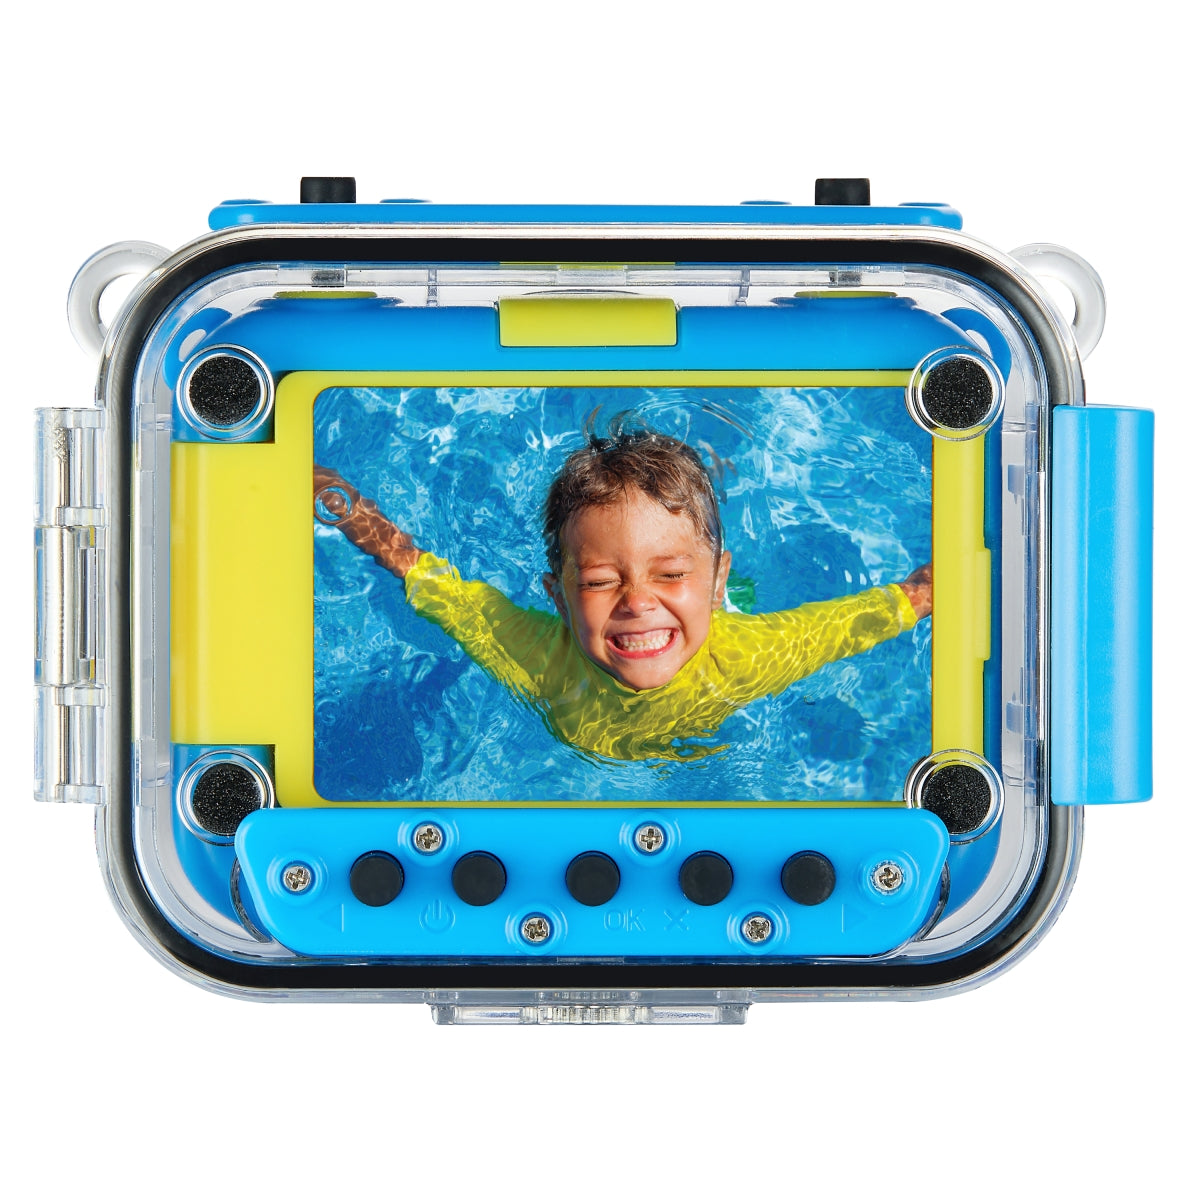 Volkano Kids Funtime 2.0 series Waterproof Camera with 180° Rotatable Screen - Blue